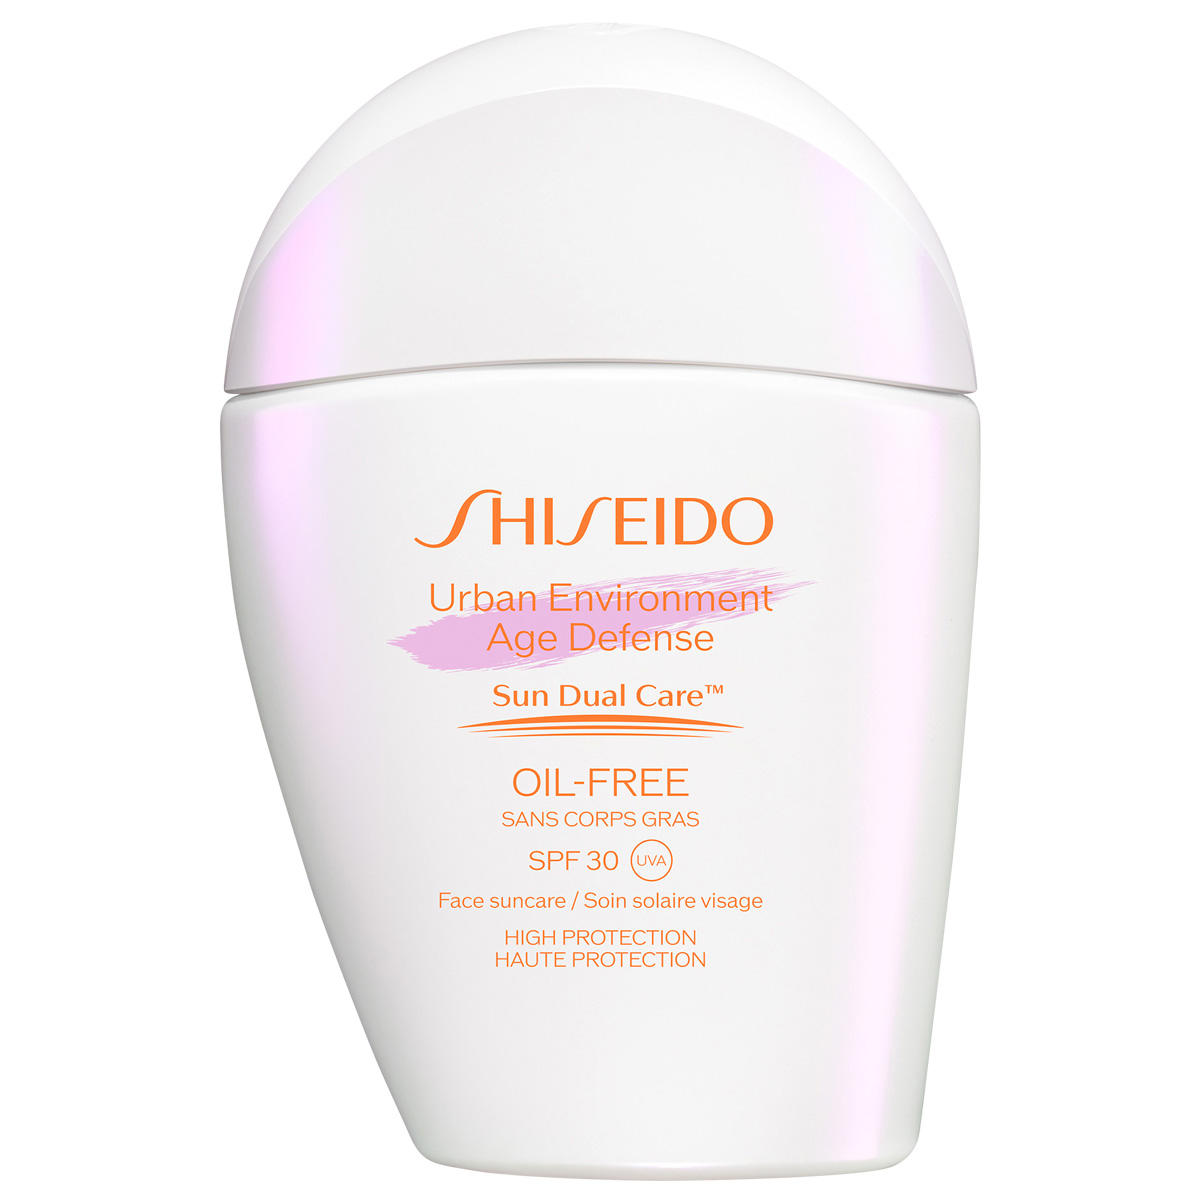 Shiseido Urban Environment Age Defense Oil-Free SPF 30 30 ml - 1